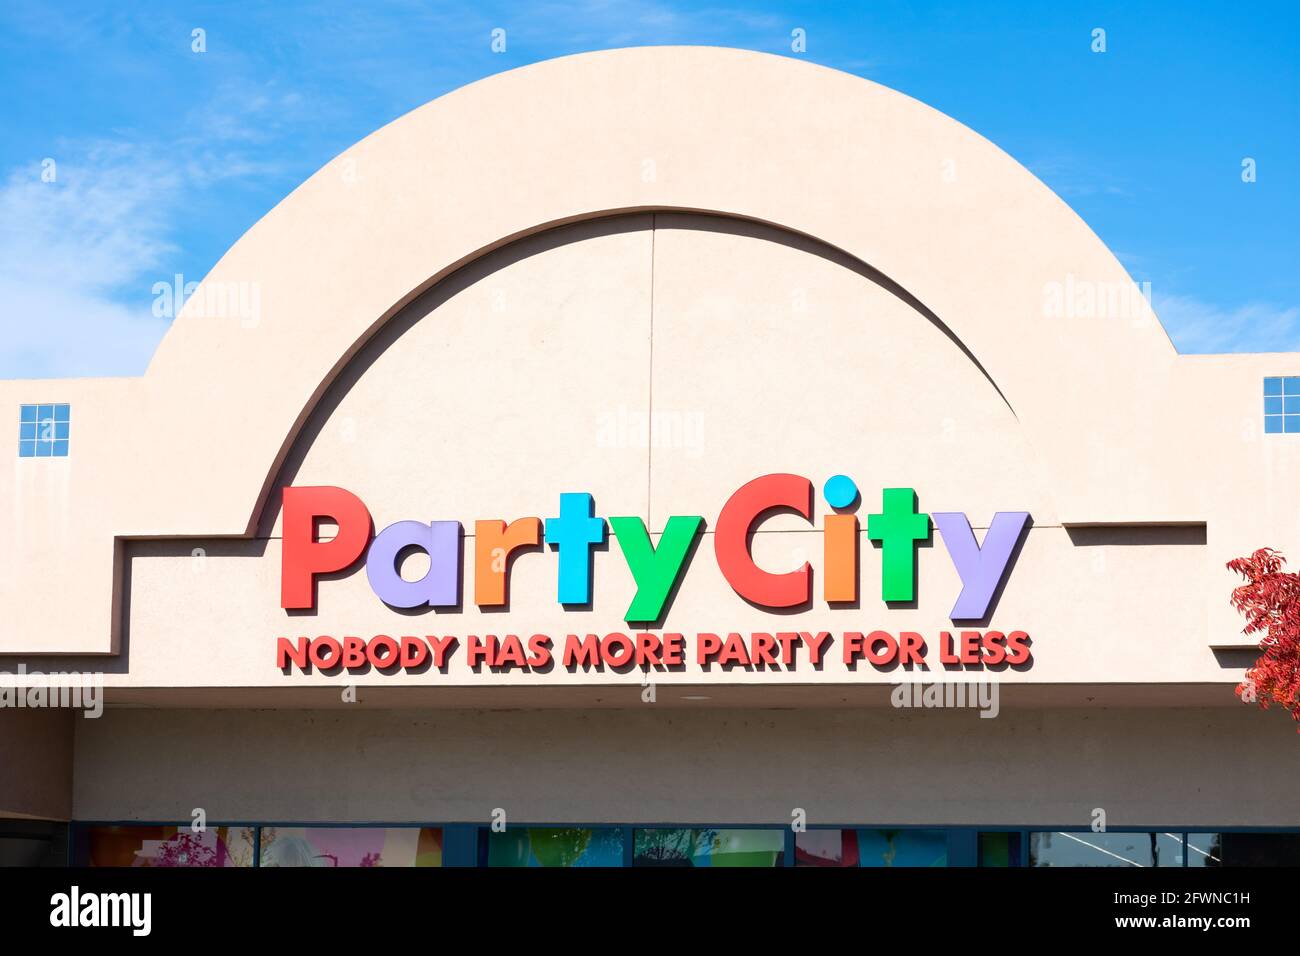 Party City retail chain store exterior. Nobody has more party for less slogan of facade. - Pleasanton, California, USA - 2020 Stock Photo